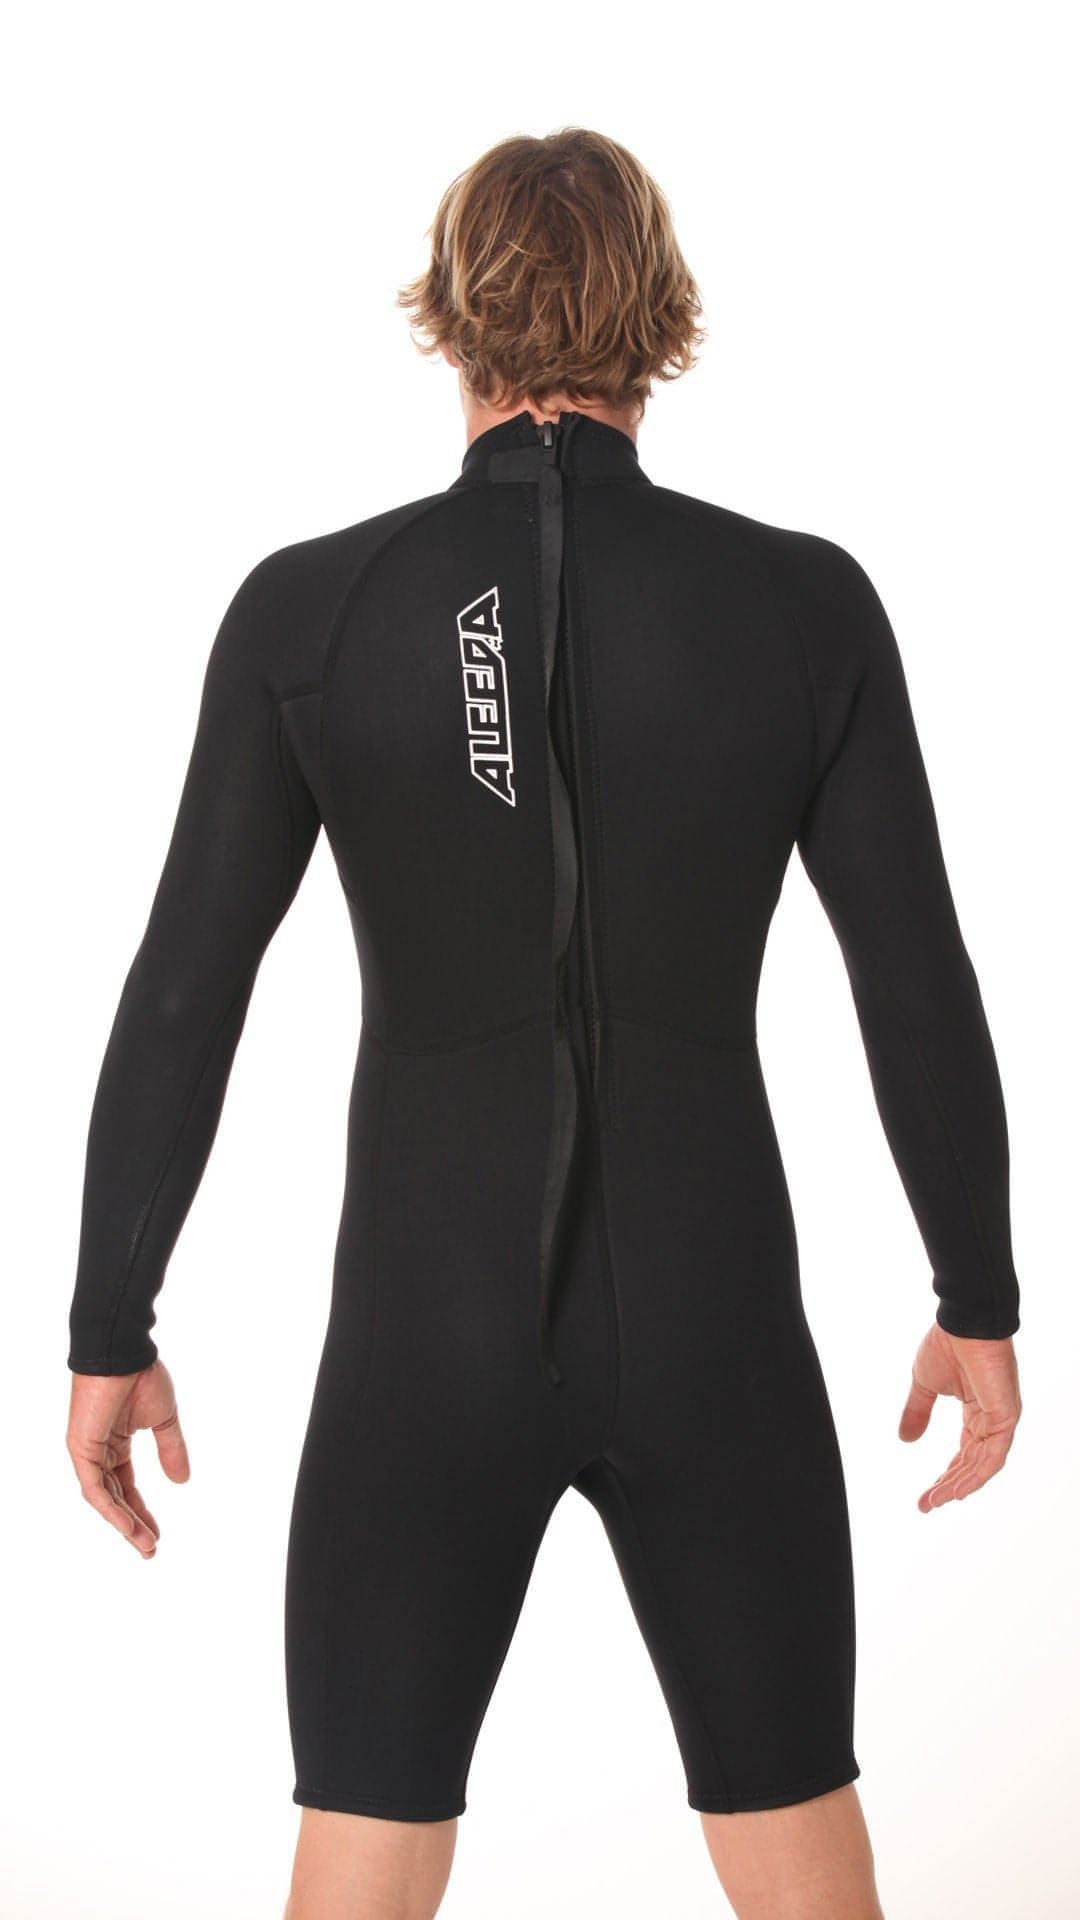 Wetsuit Springsuit, Long Sleeve, 2mm, Mens, Adult - back